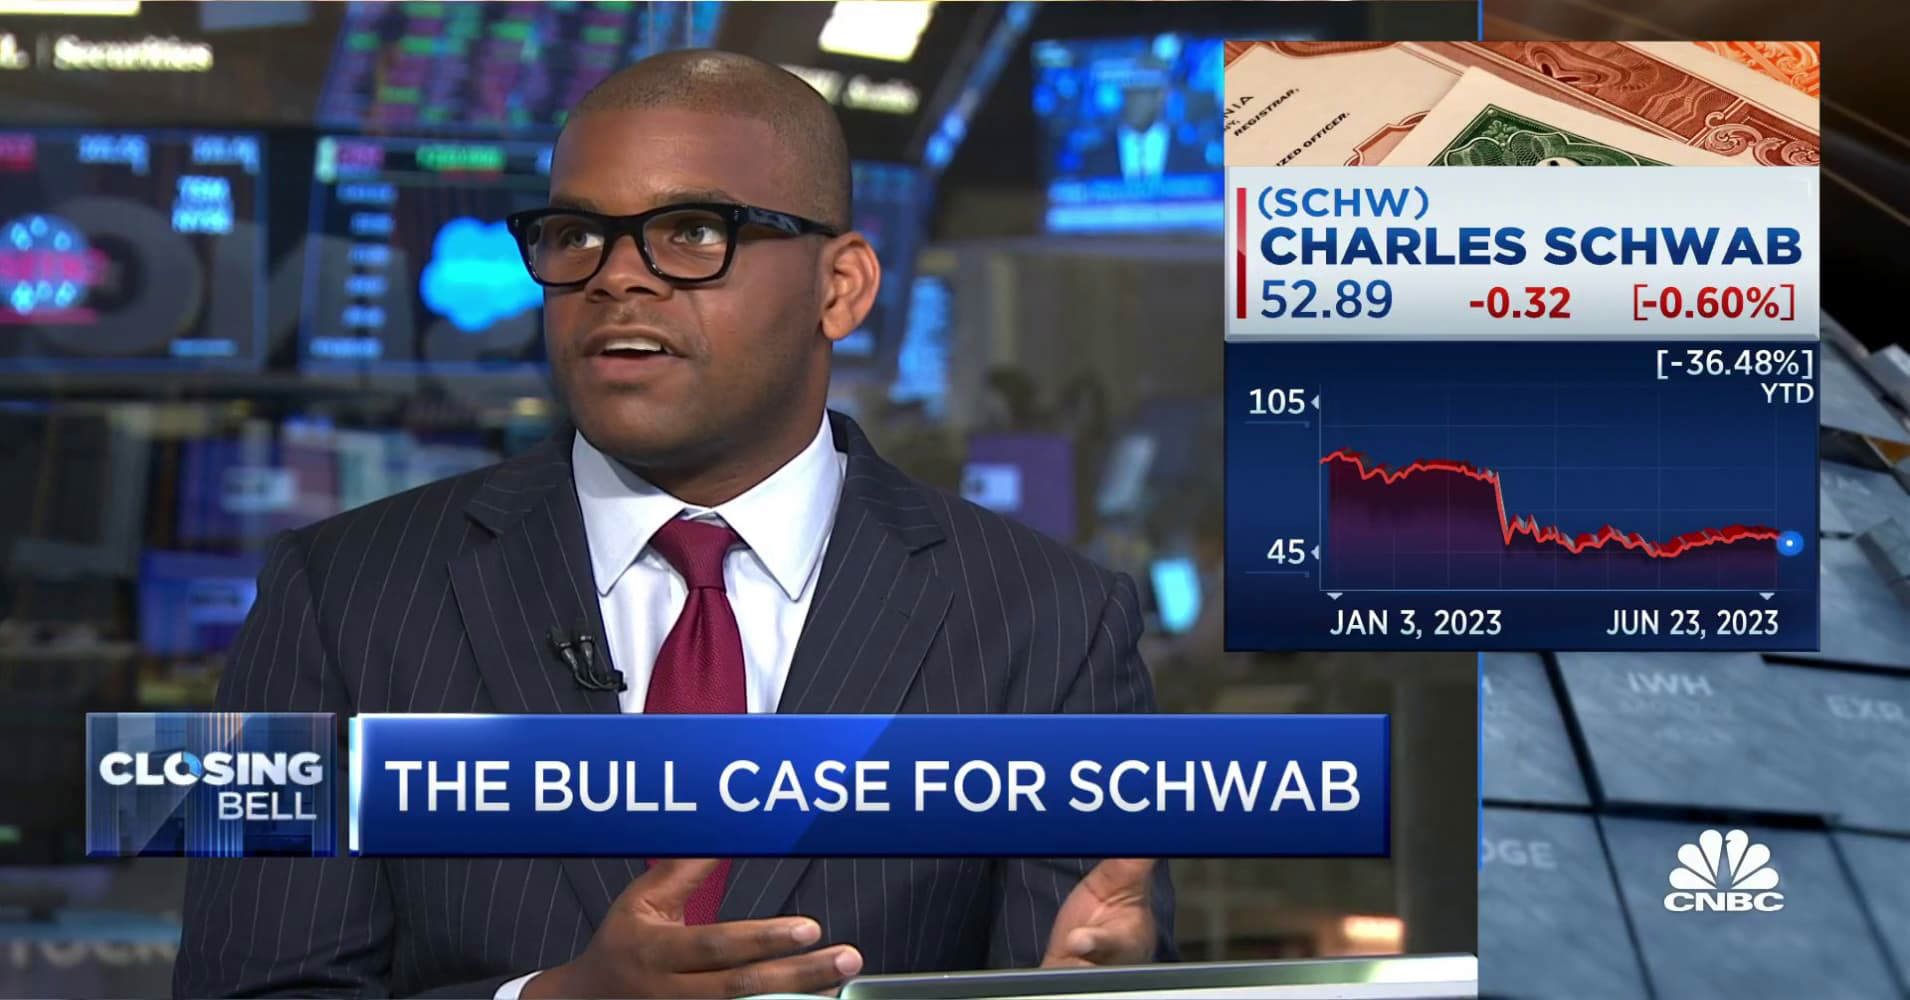 The bull case for Charles Schwab